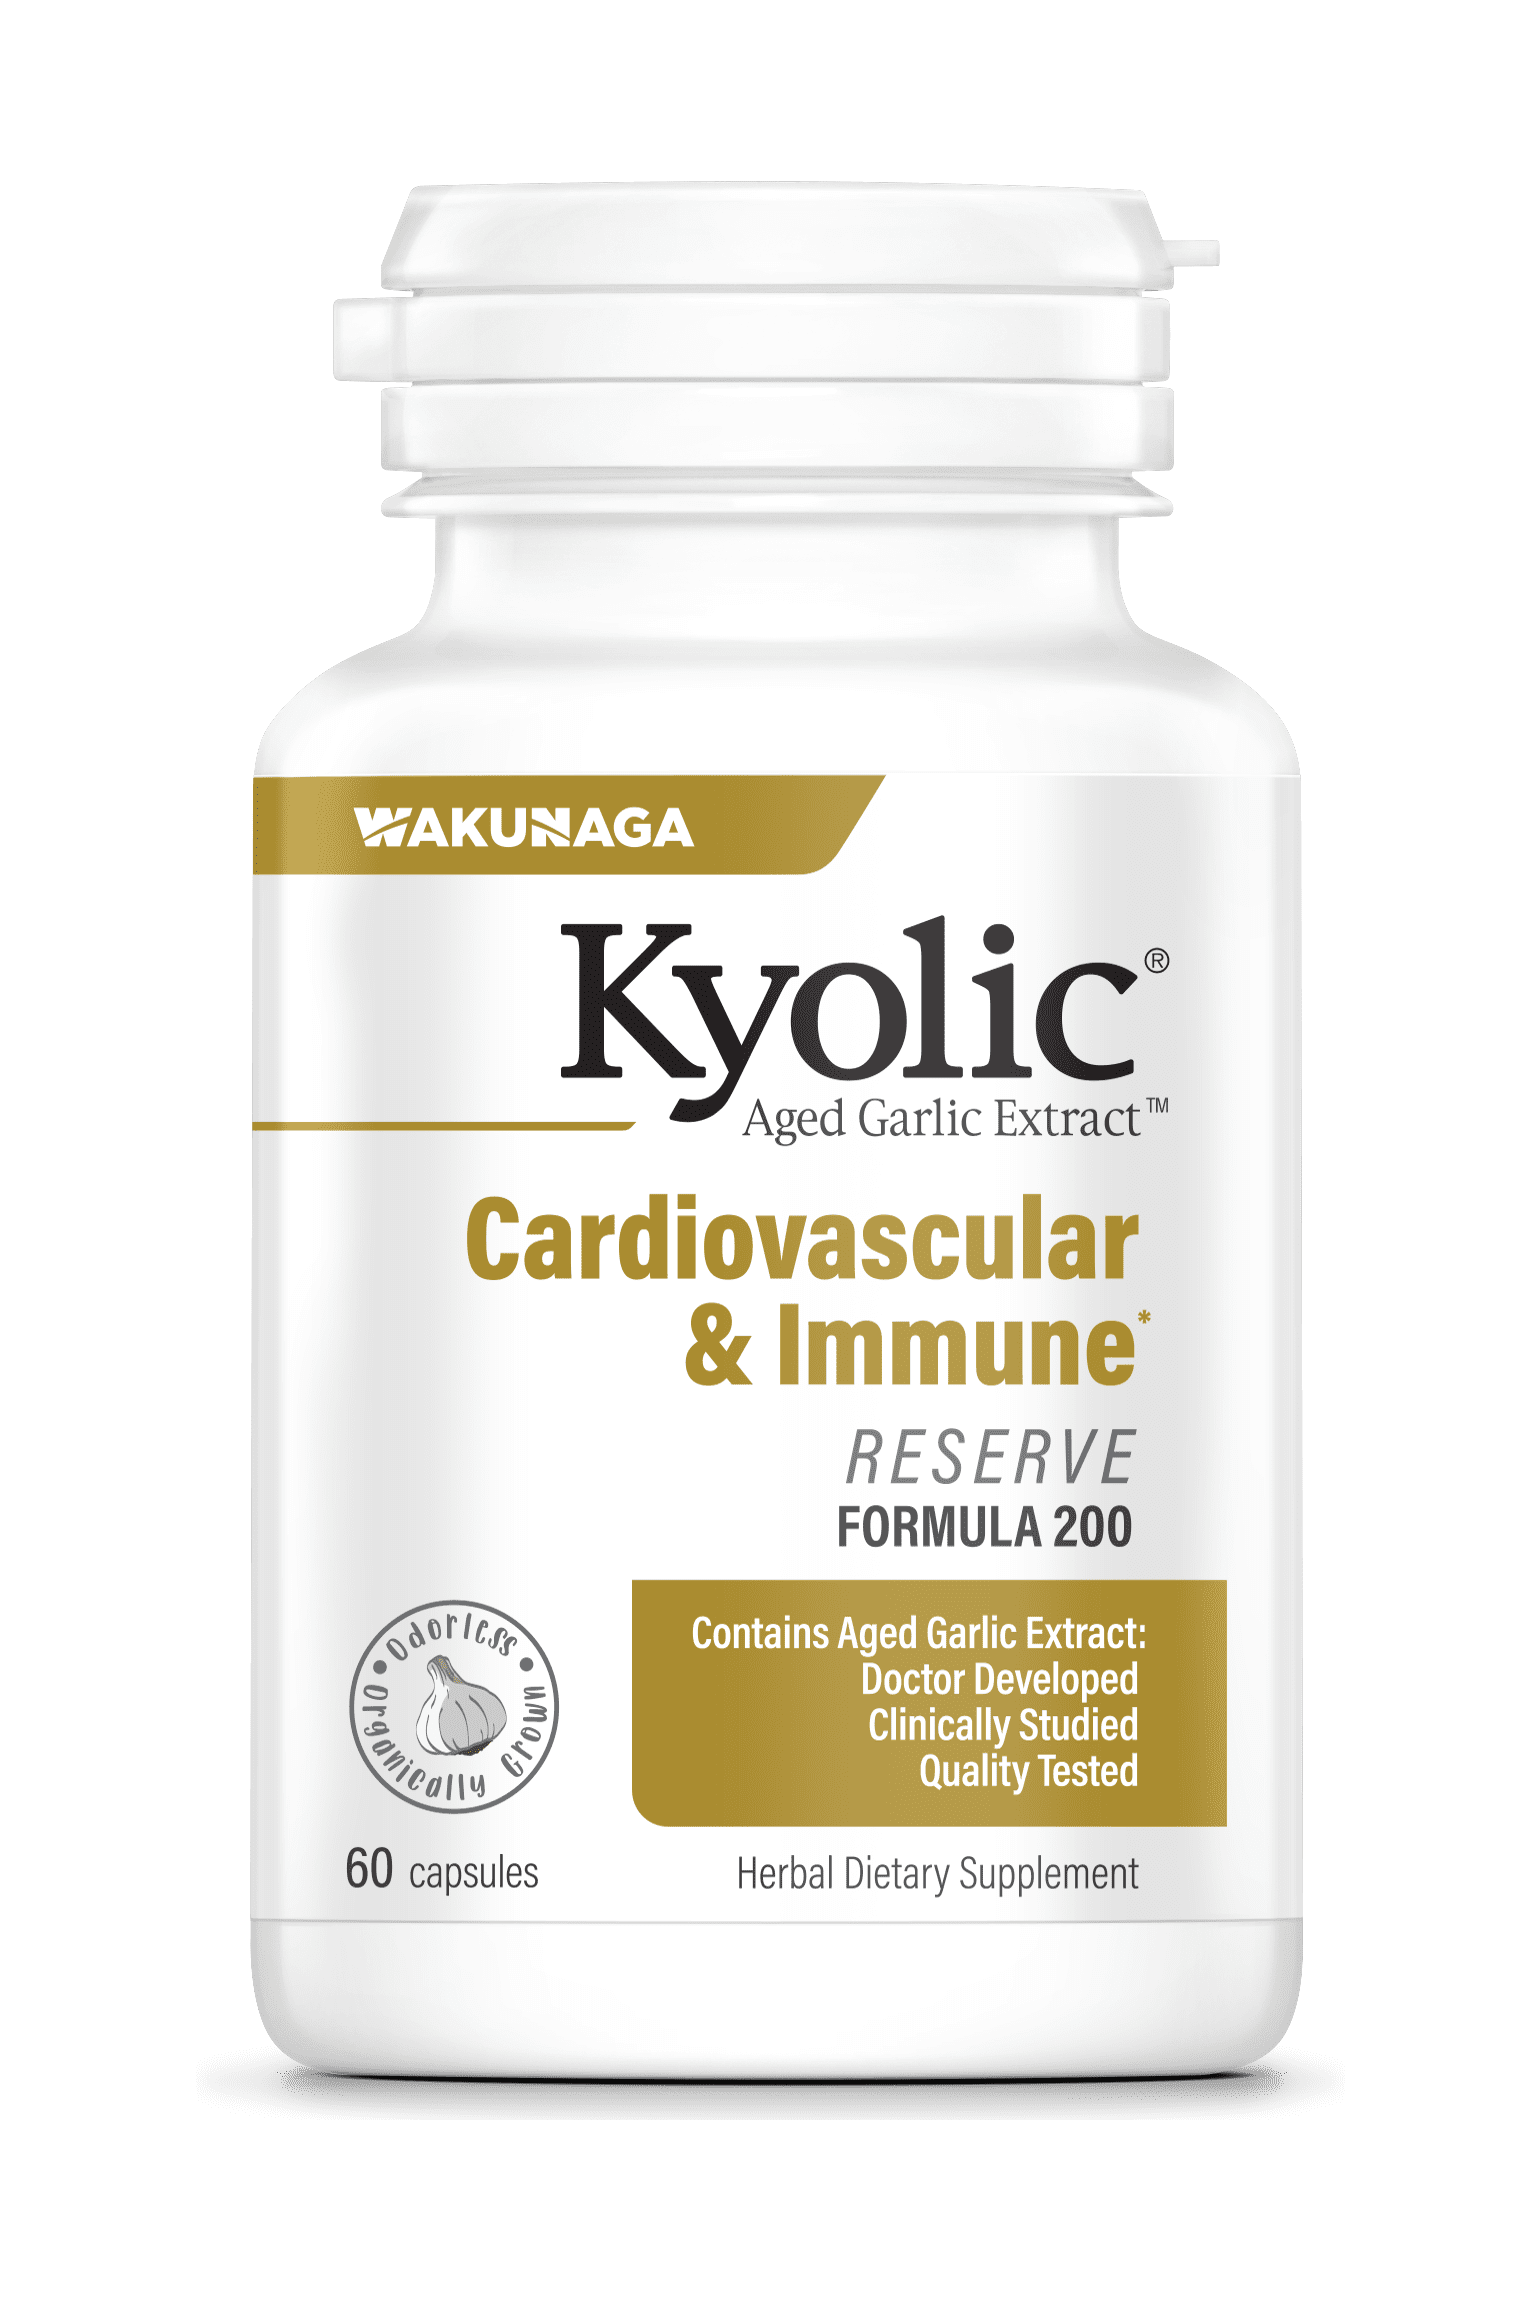 Kyolic® AGE Cardiovascular & Immune, Reserve